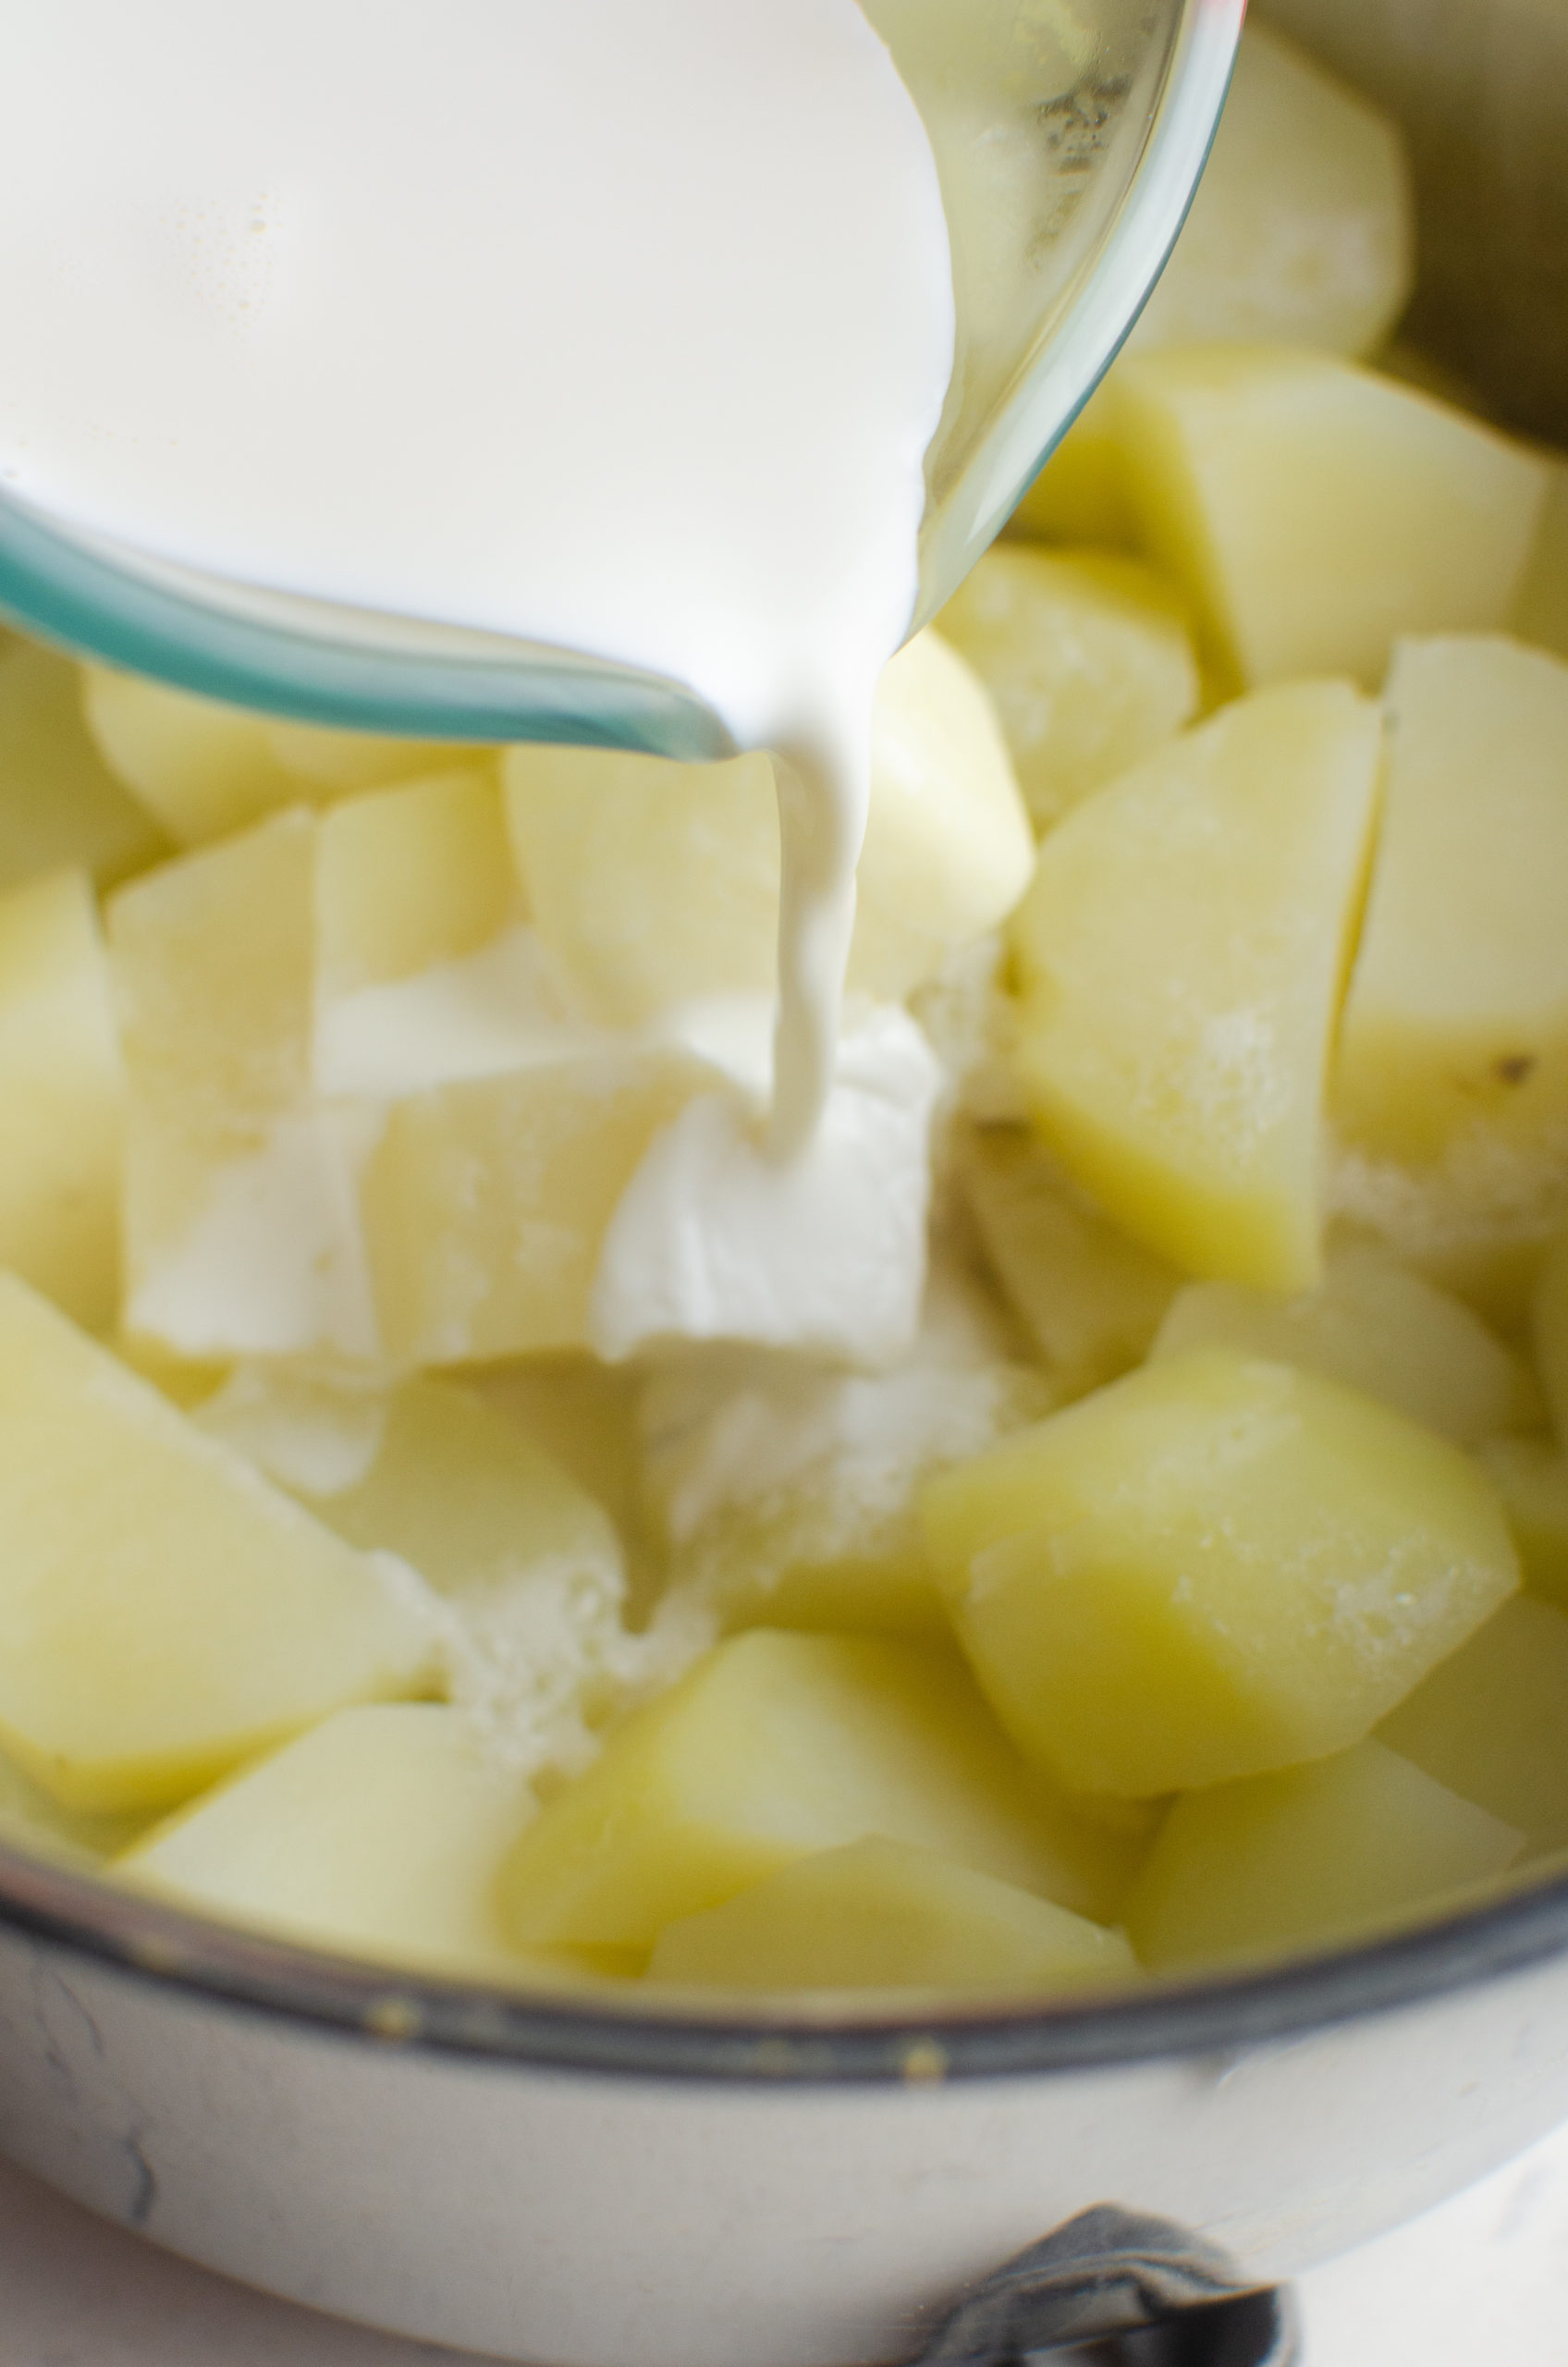 Pouring cream into potatoes.